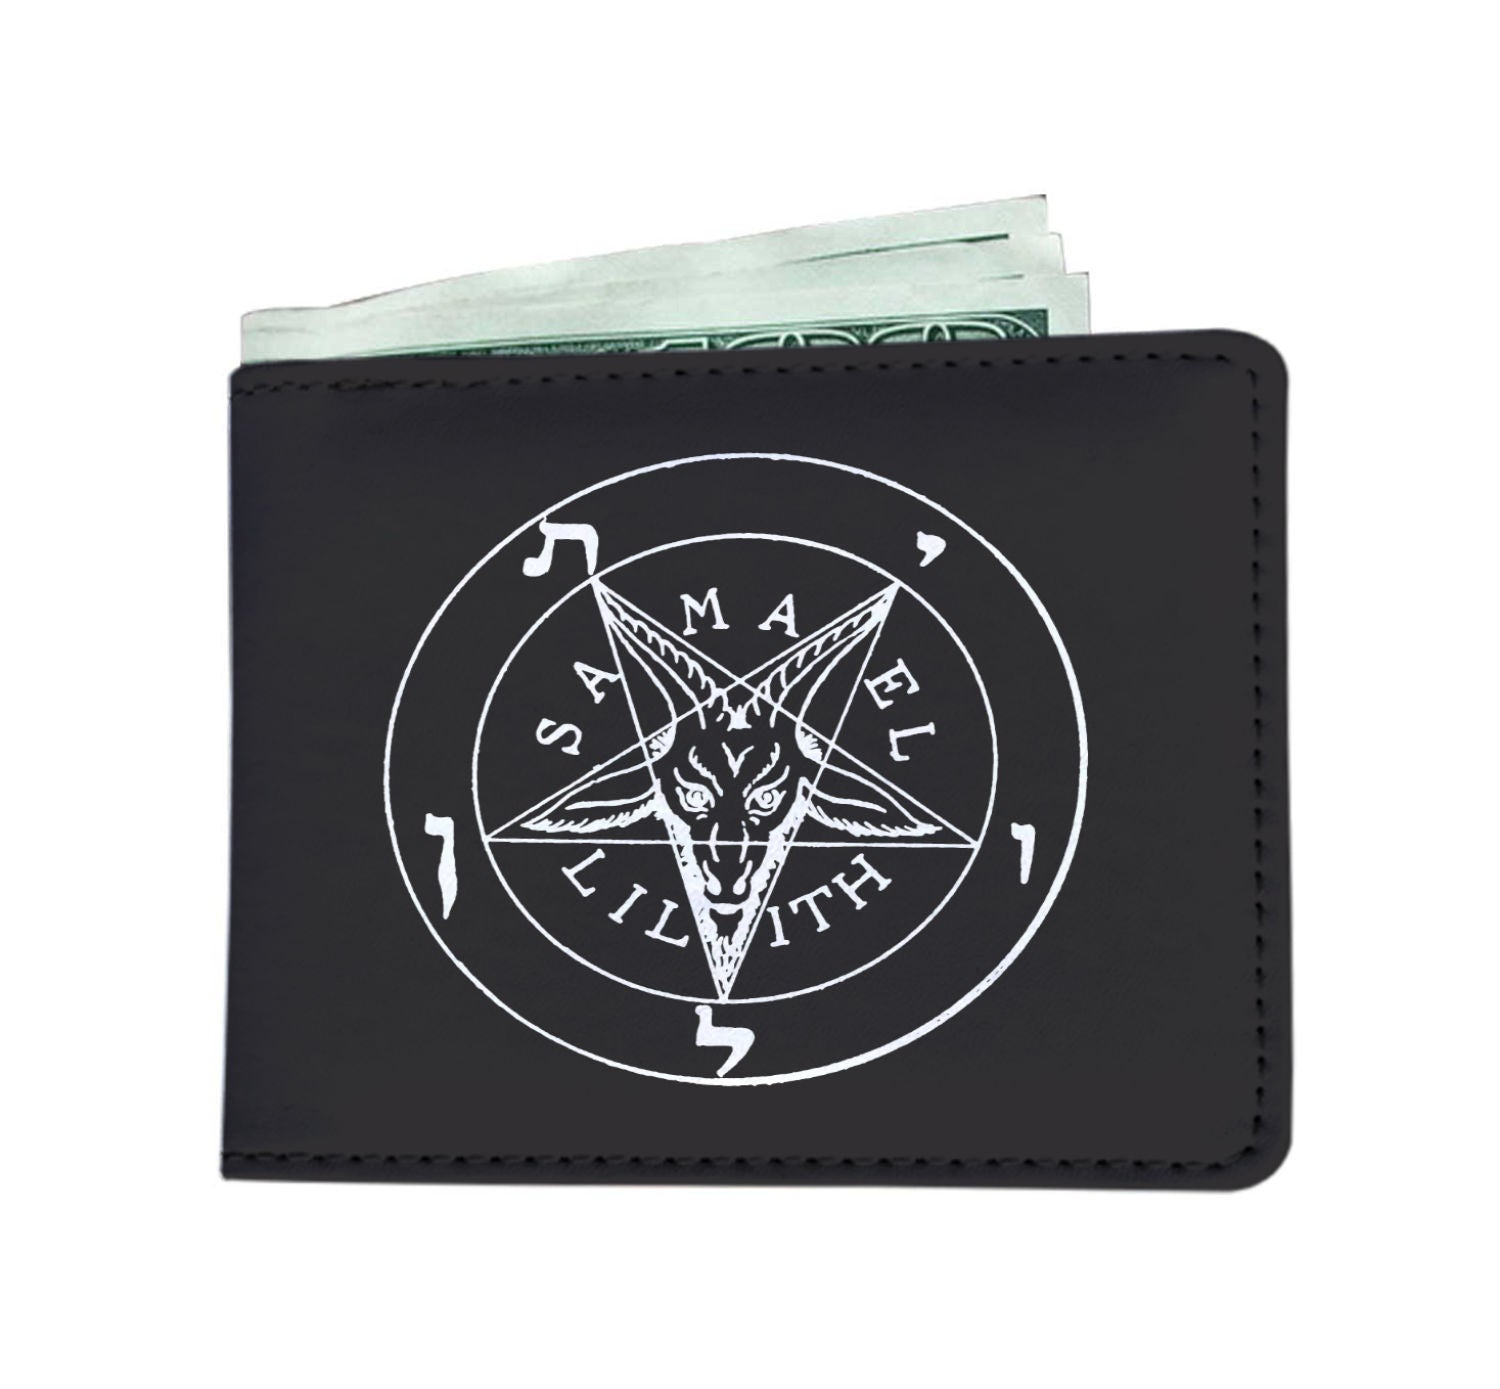 The Satanic wallet